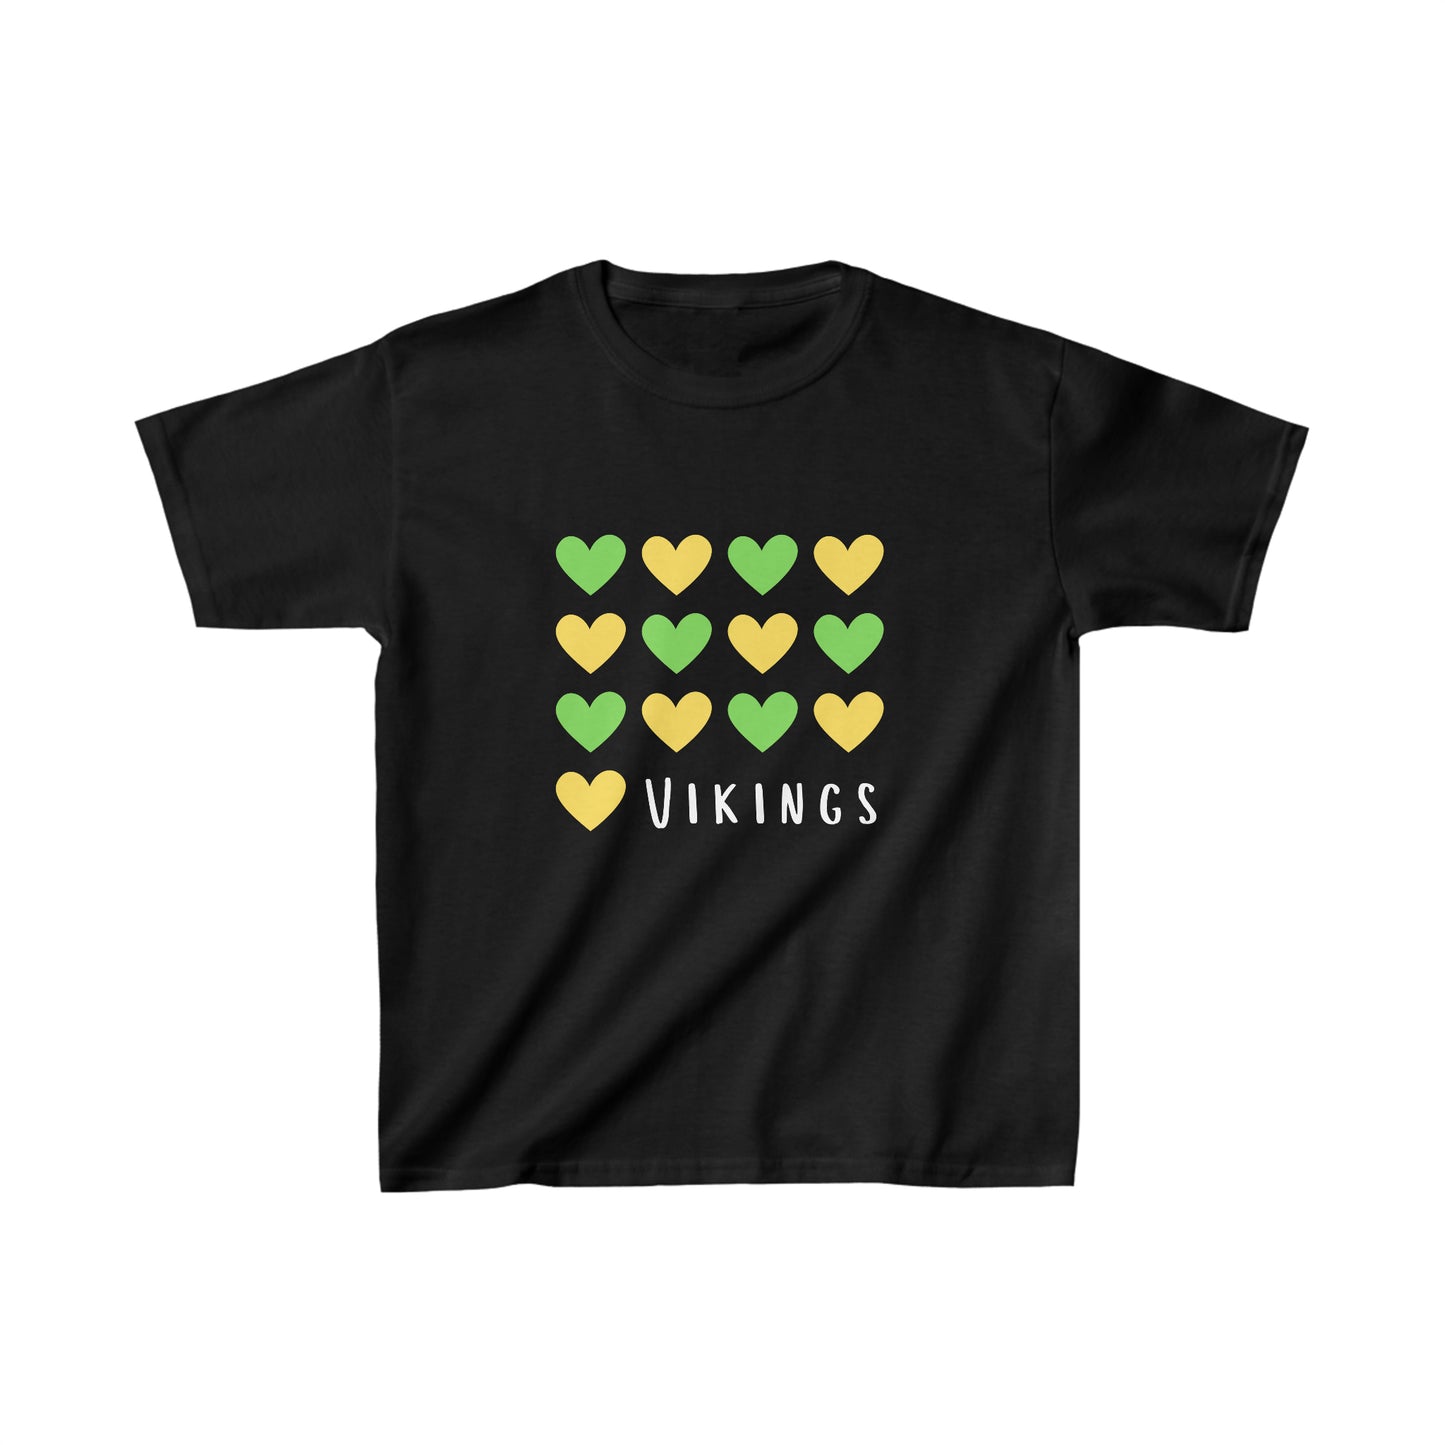 I HEART Vikings - Kids T-Shirt